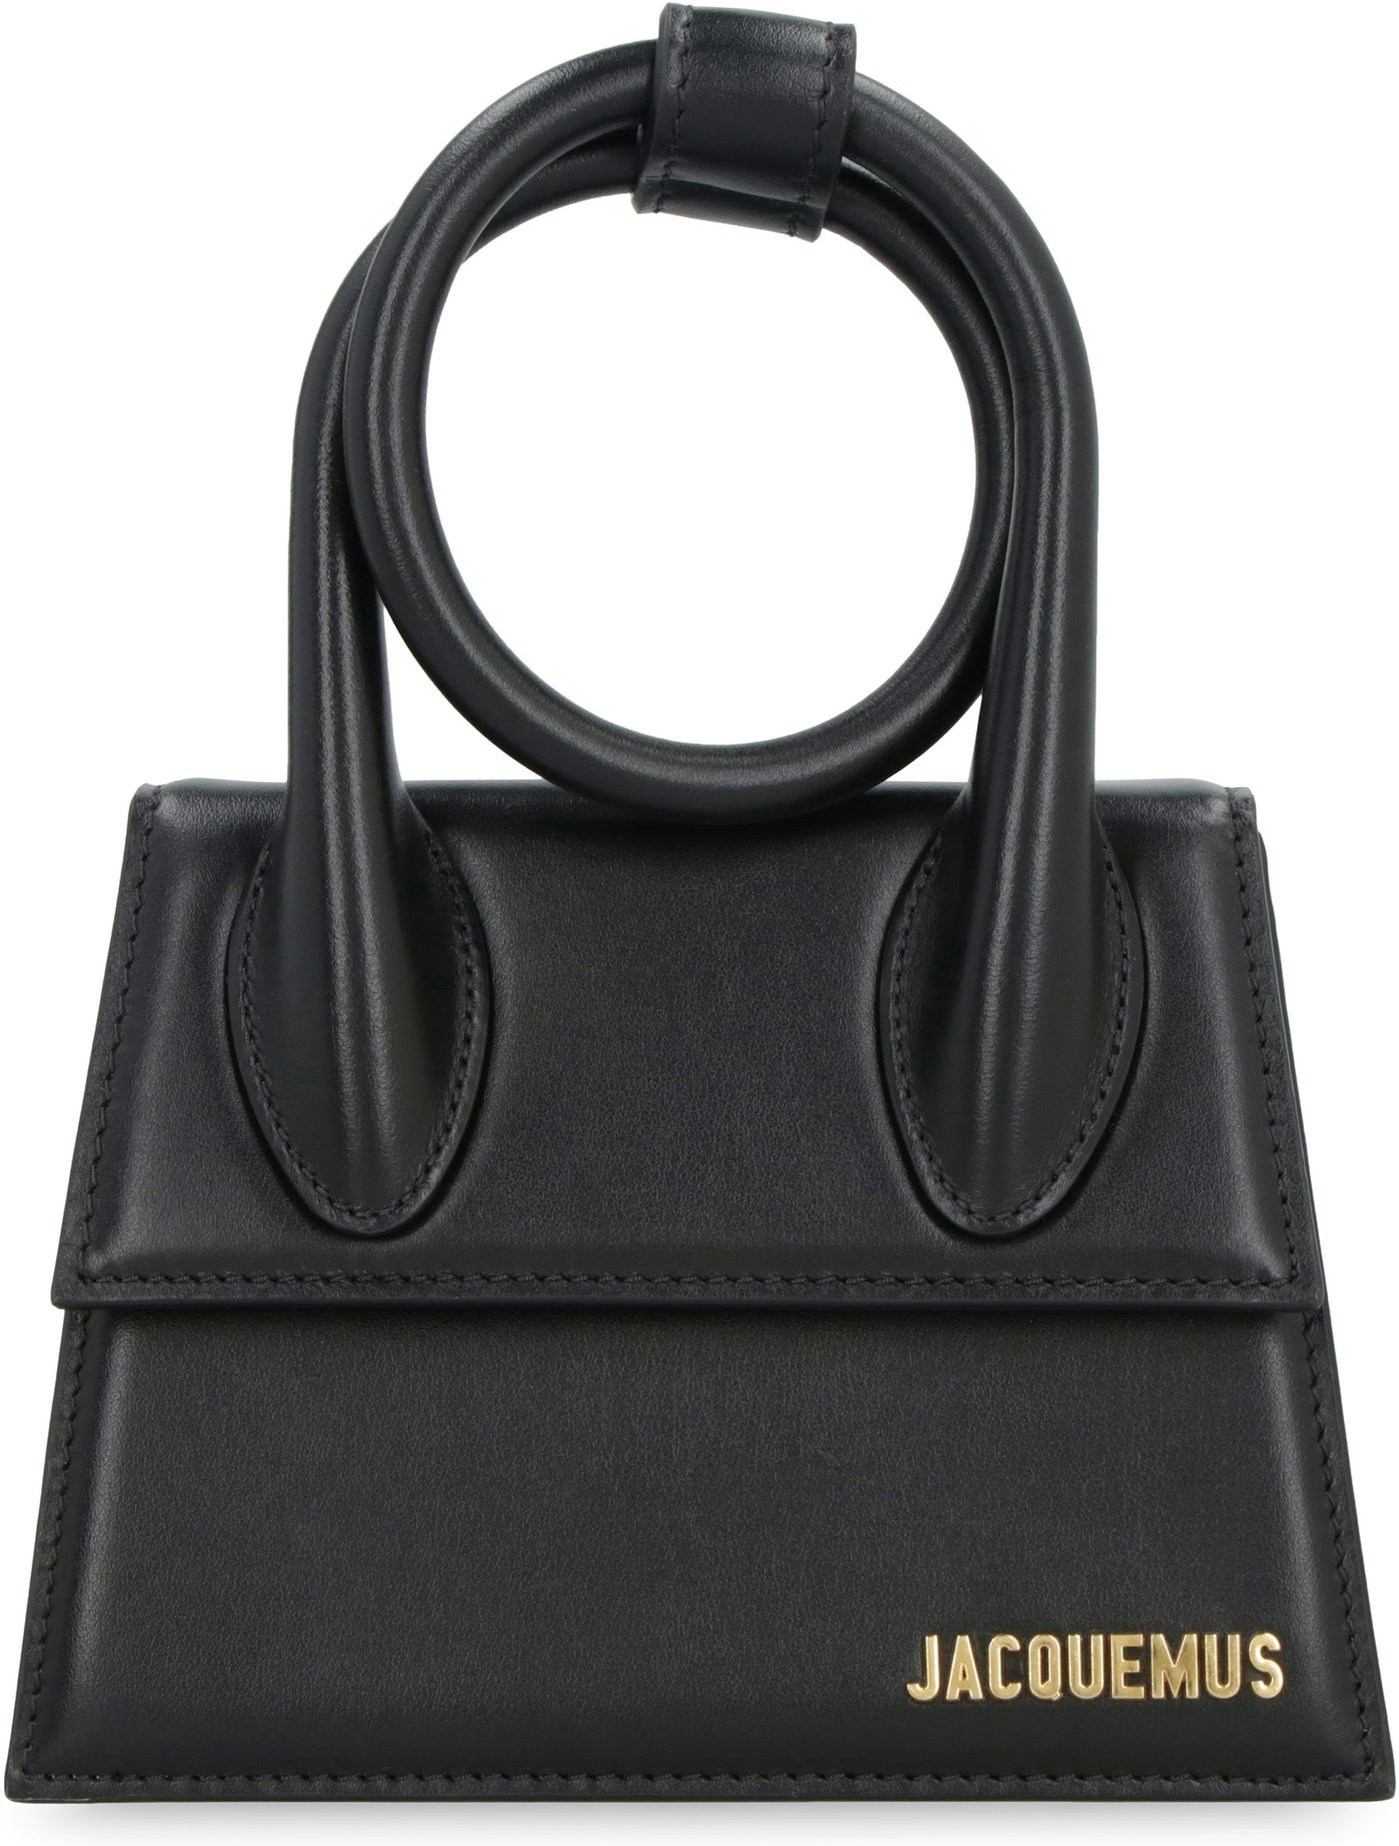 Jacquemus Le Chiquito Noeud Leather Handbag